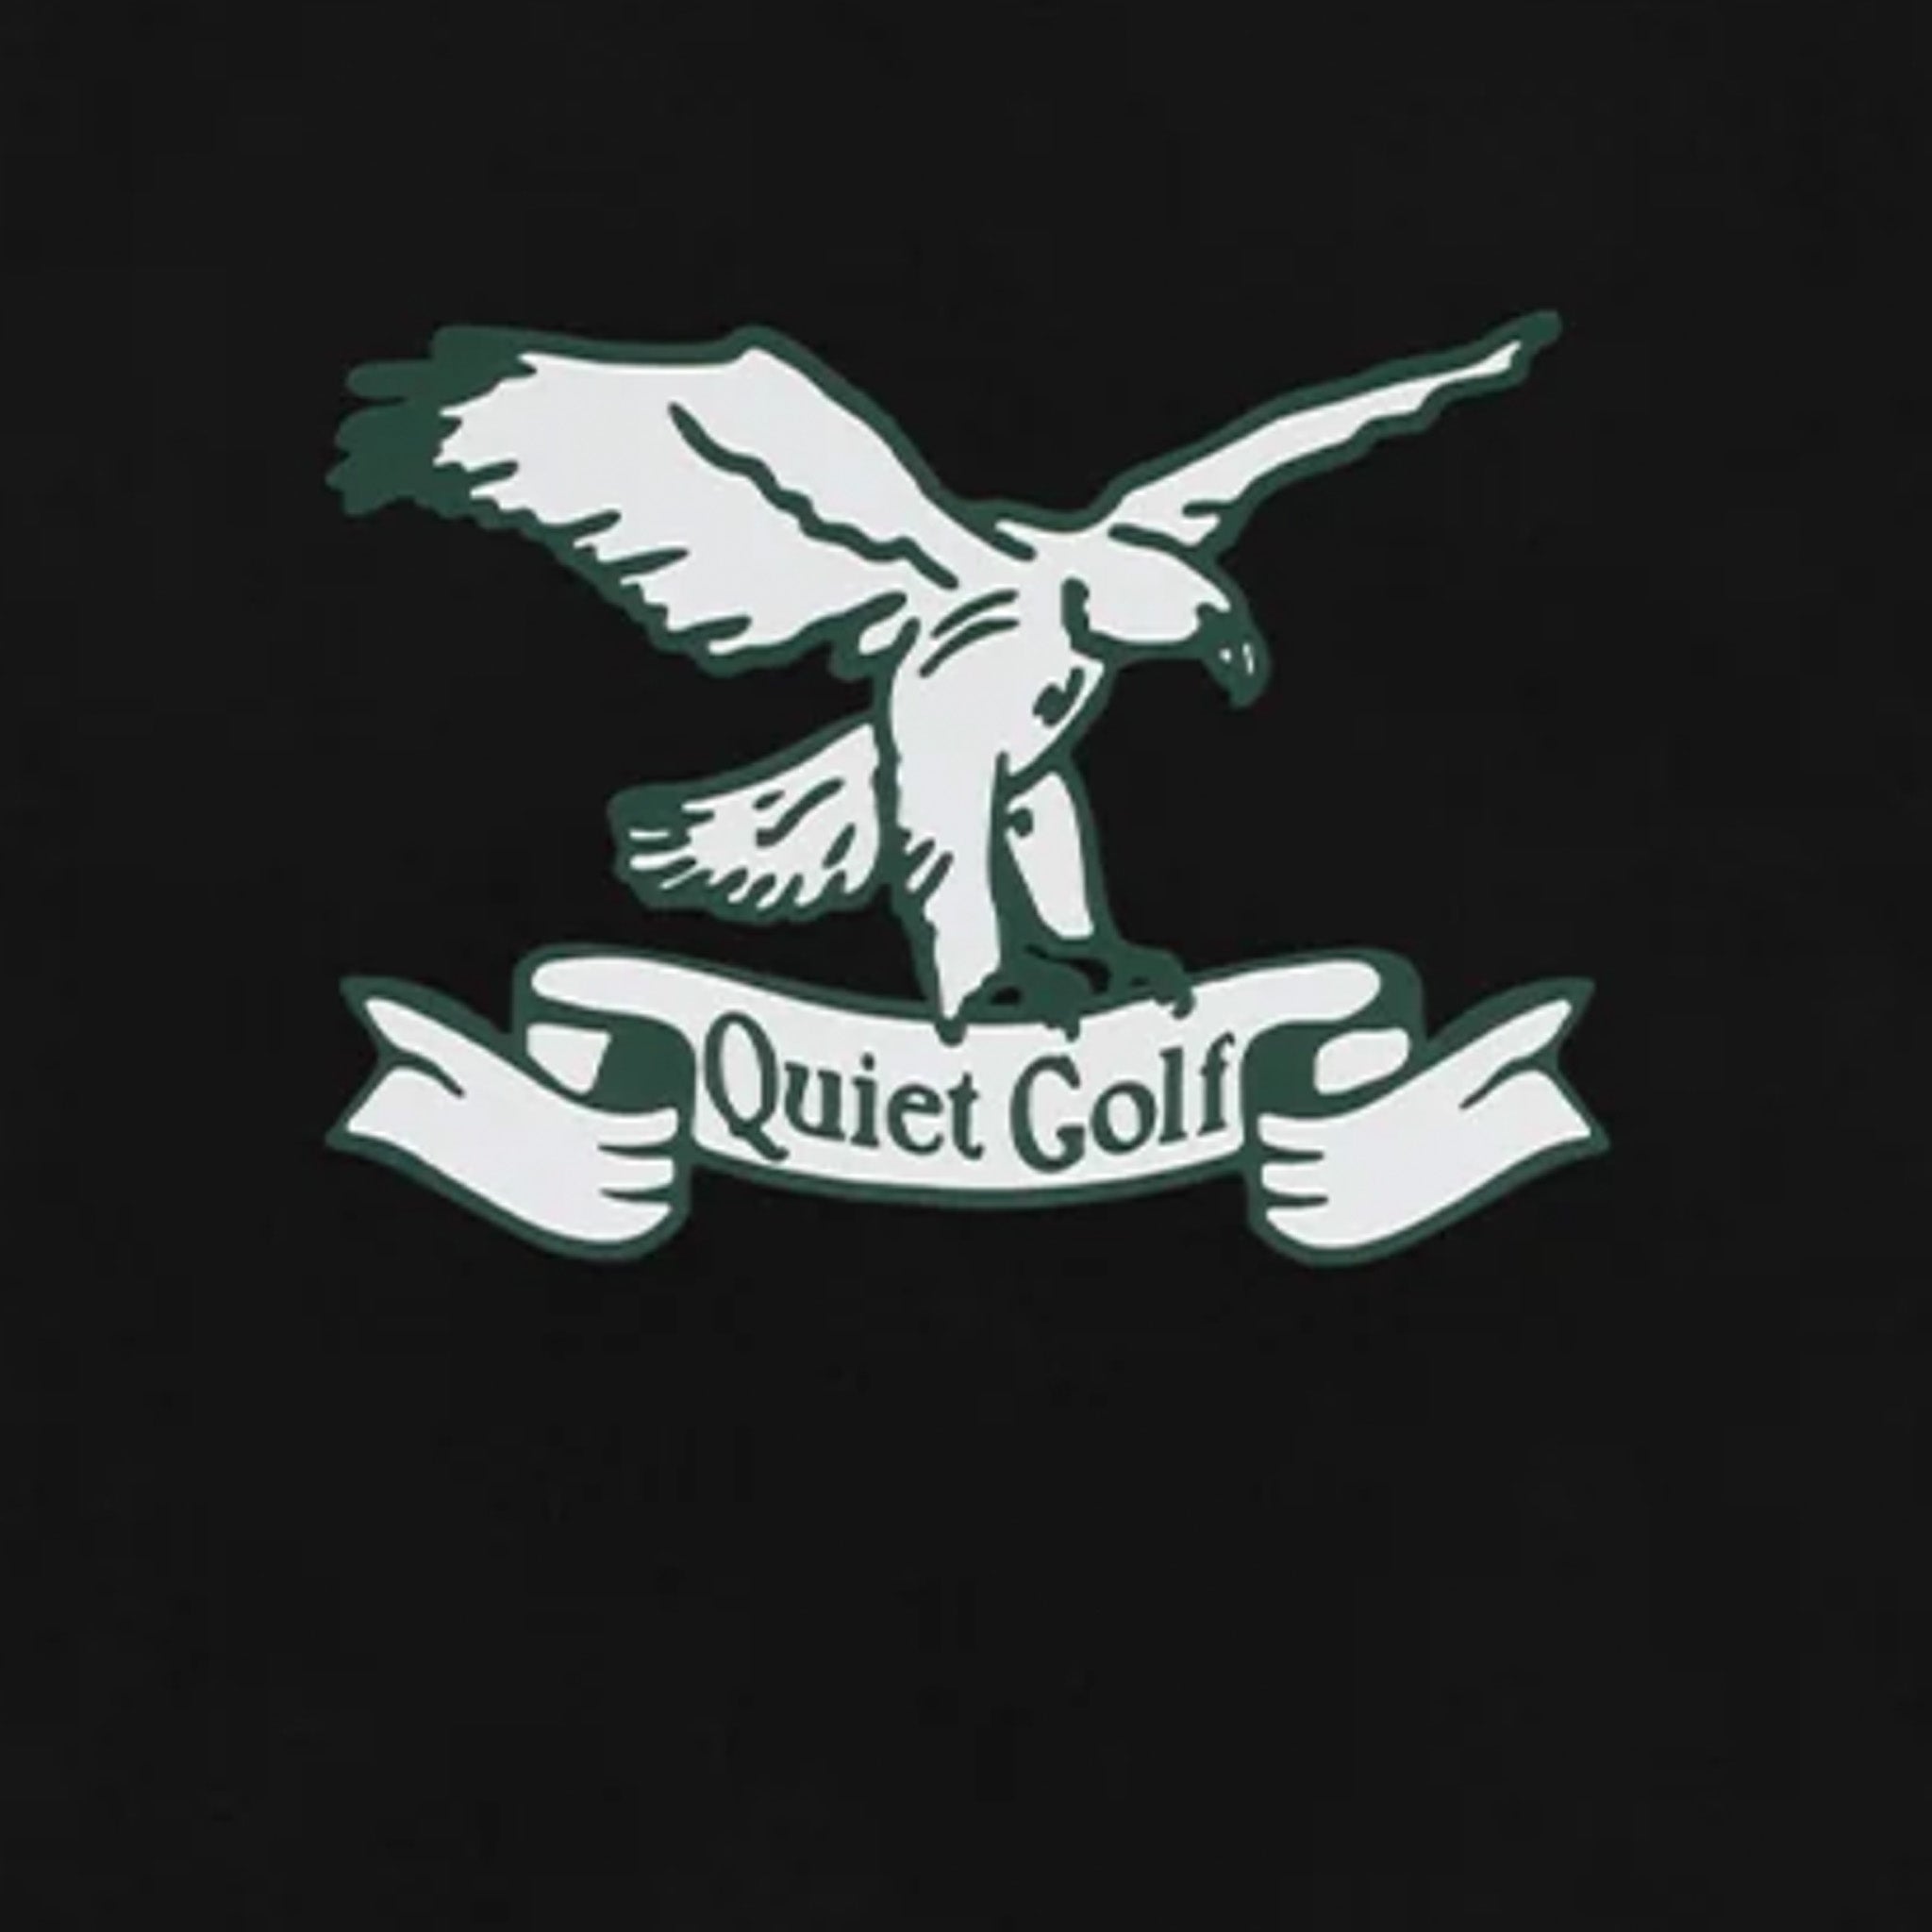 Quiet Golf Society T-Shirt (Black) - August Shop